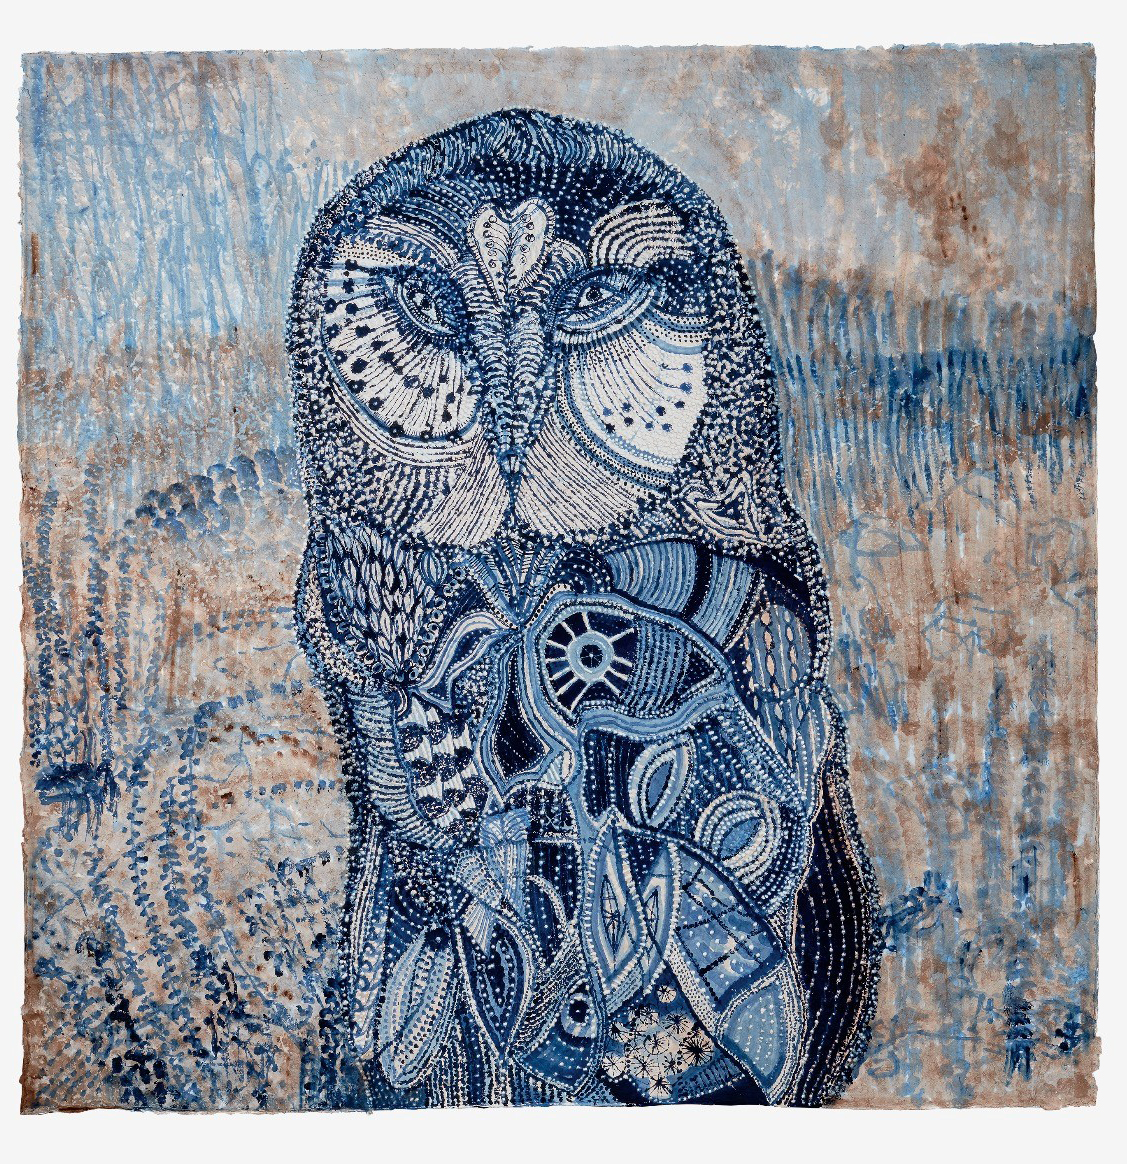 4 A1461 Joshua Yeldham, Owl of blue bells